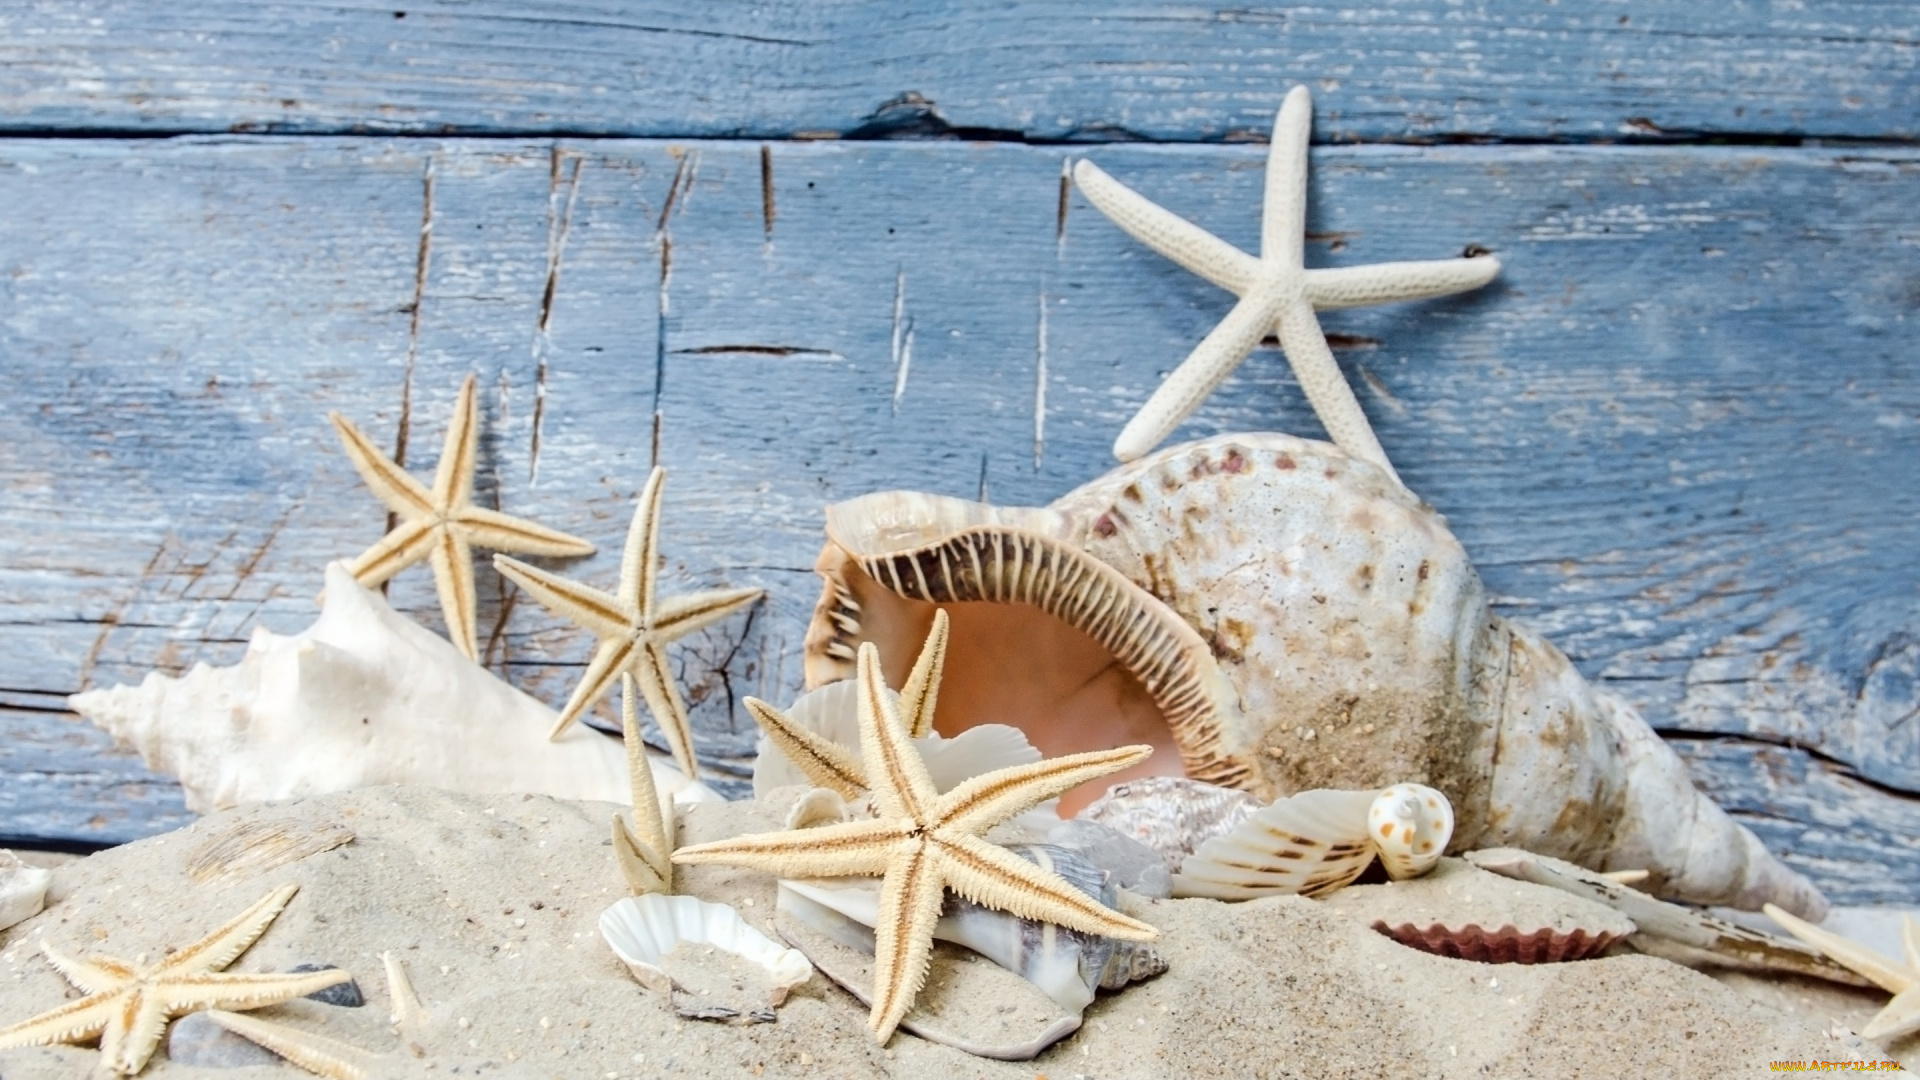 разное, ракушки, , кораллы, , декоративные, и, spa-камни, песок, пляж, звезды, beach, starfishes, seashells, wood, sand